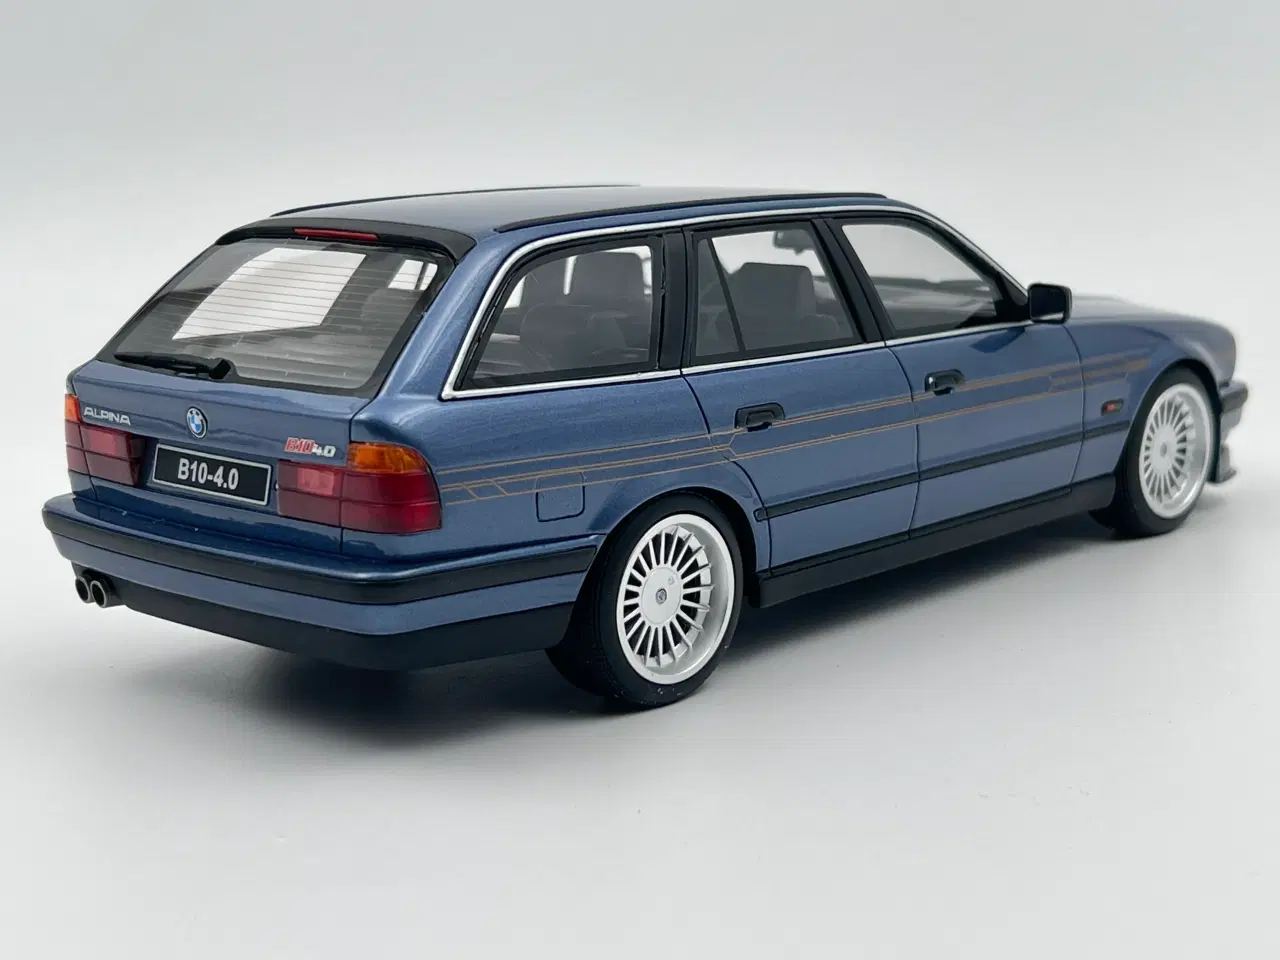 Billede 4 - 1995 BMW Alpina B10 4.0 Touring e34 - 1:18